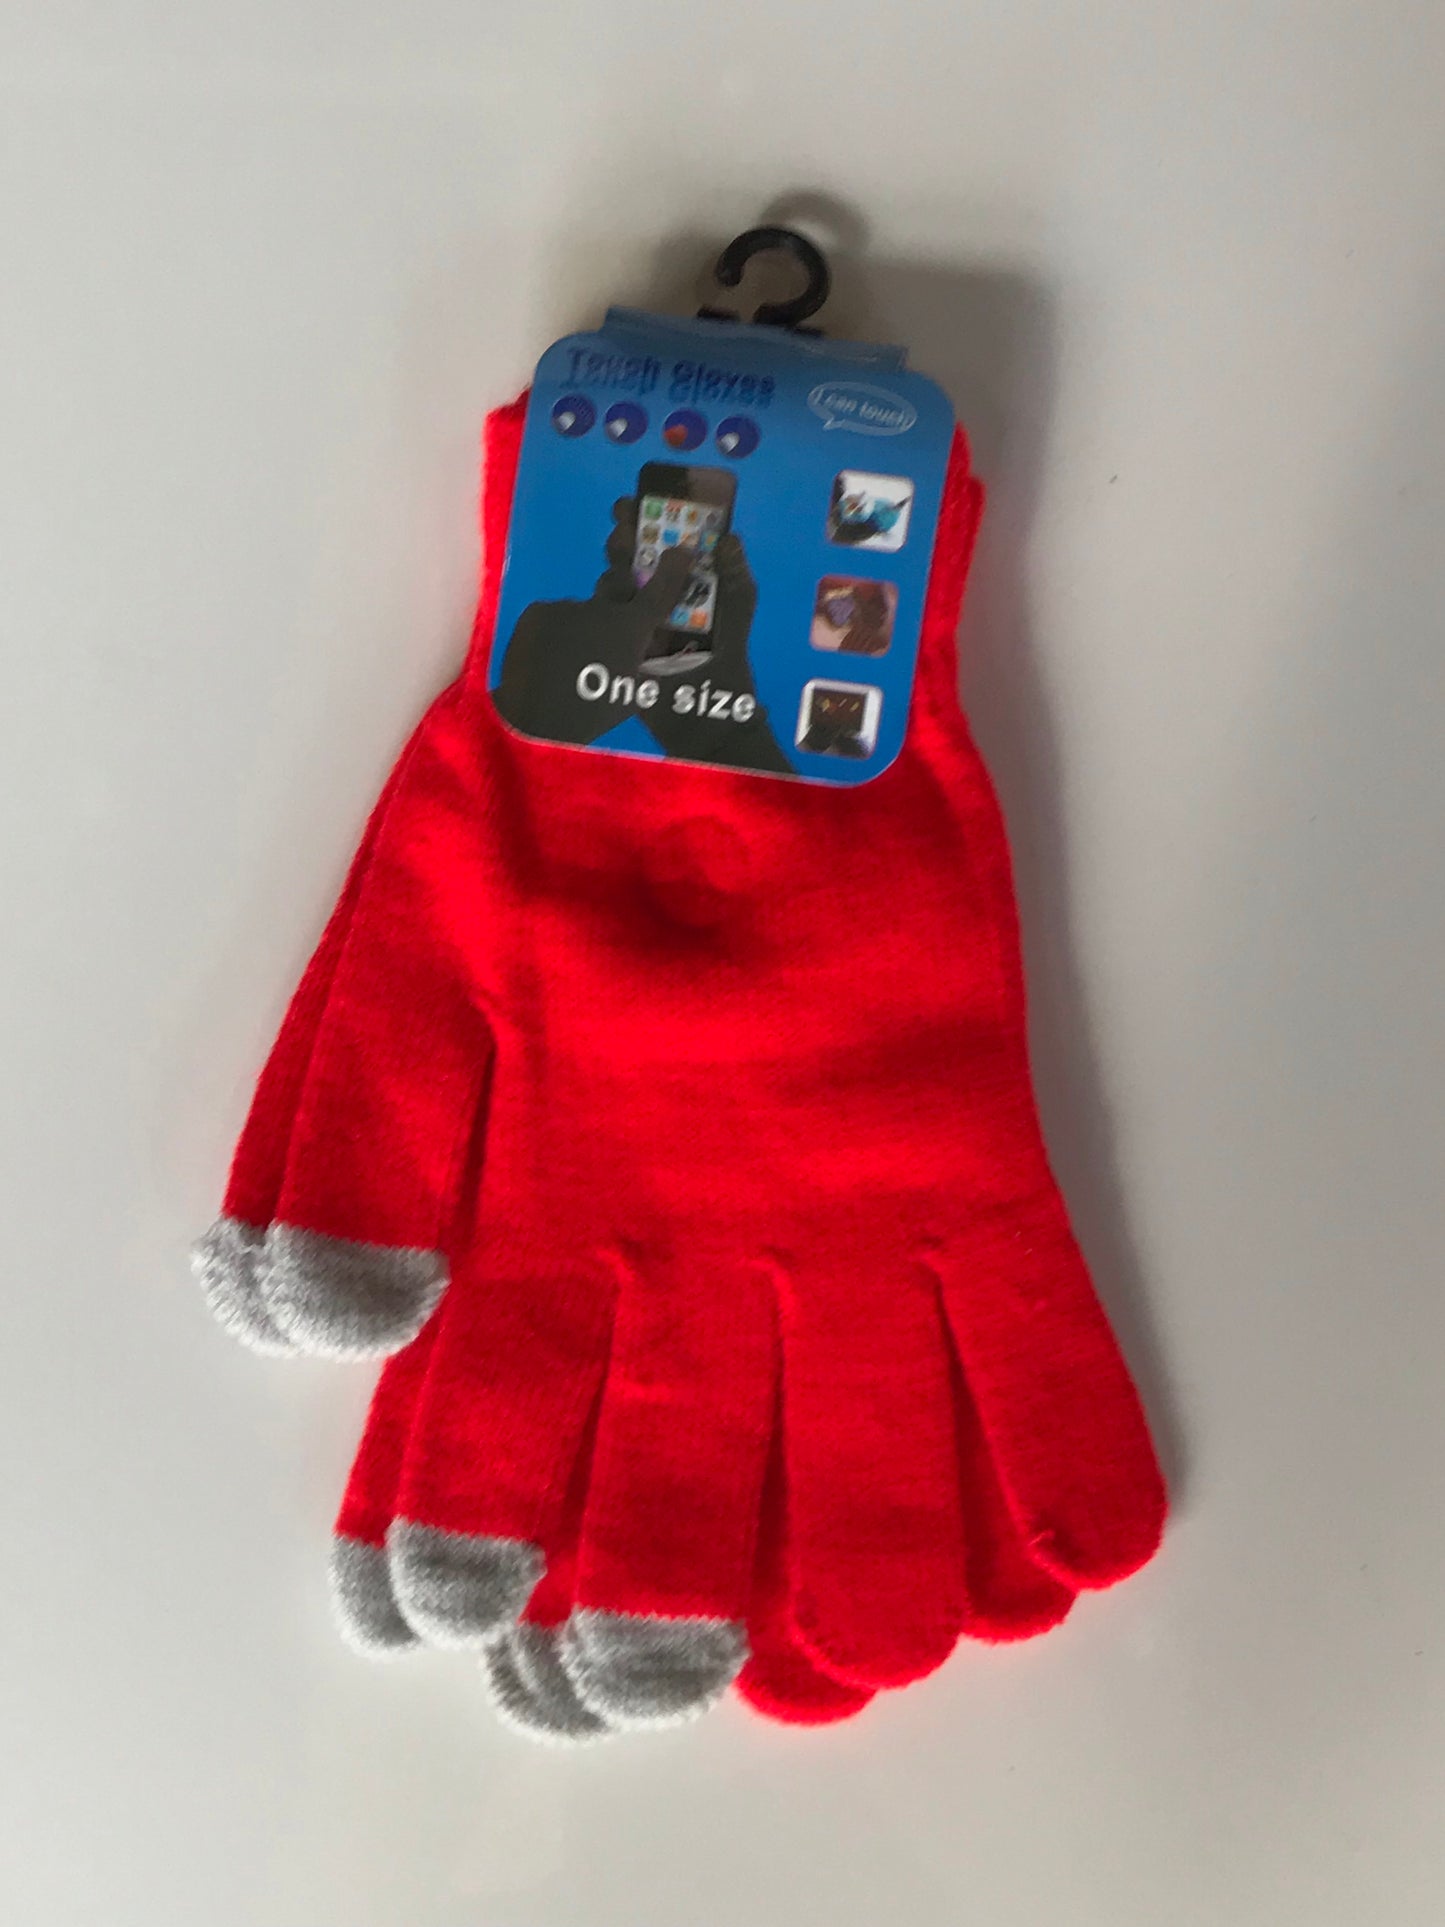 iTouch Gloves (Fit Men & Women)